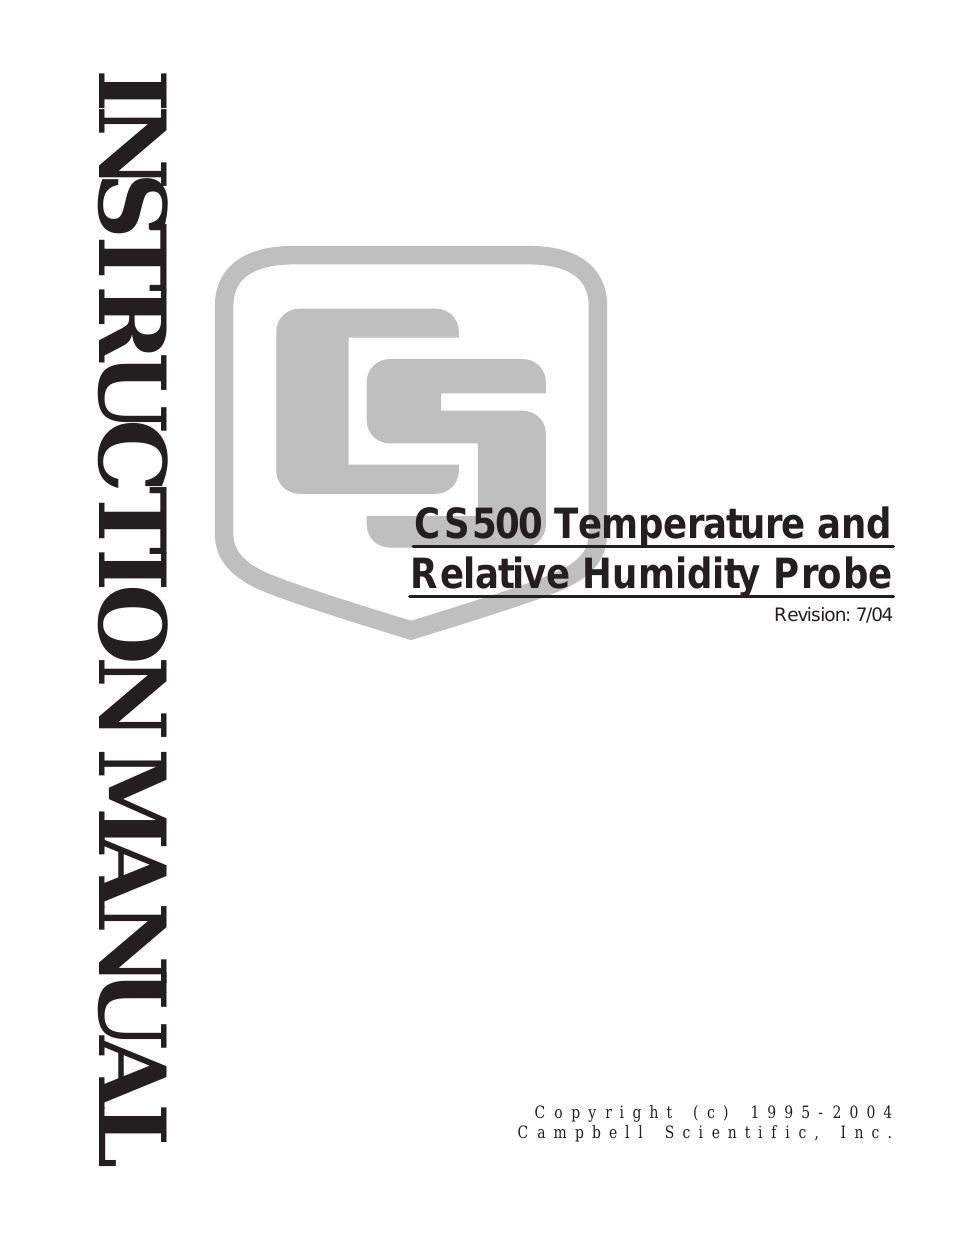 CS500-L Temperature and Relative Humidity Probe